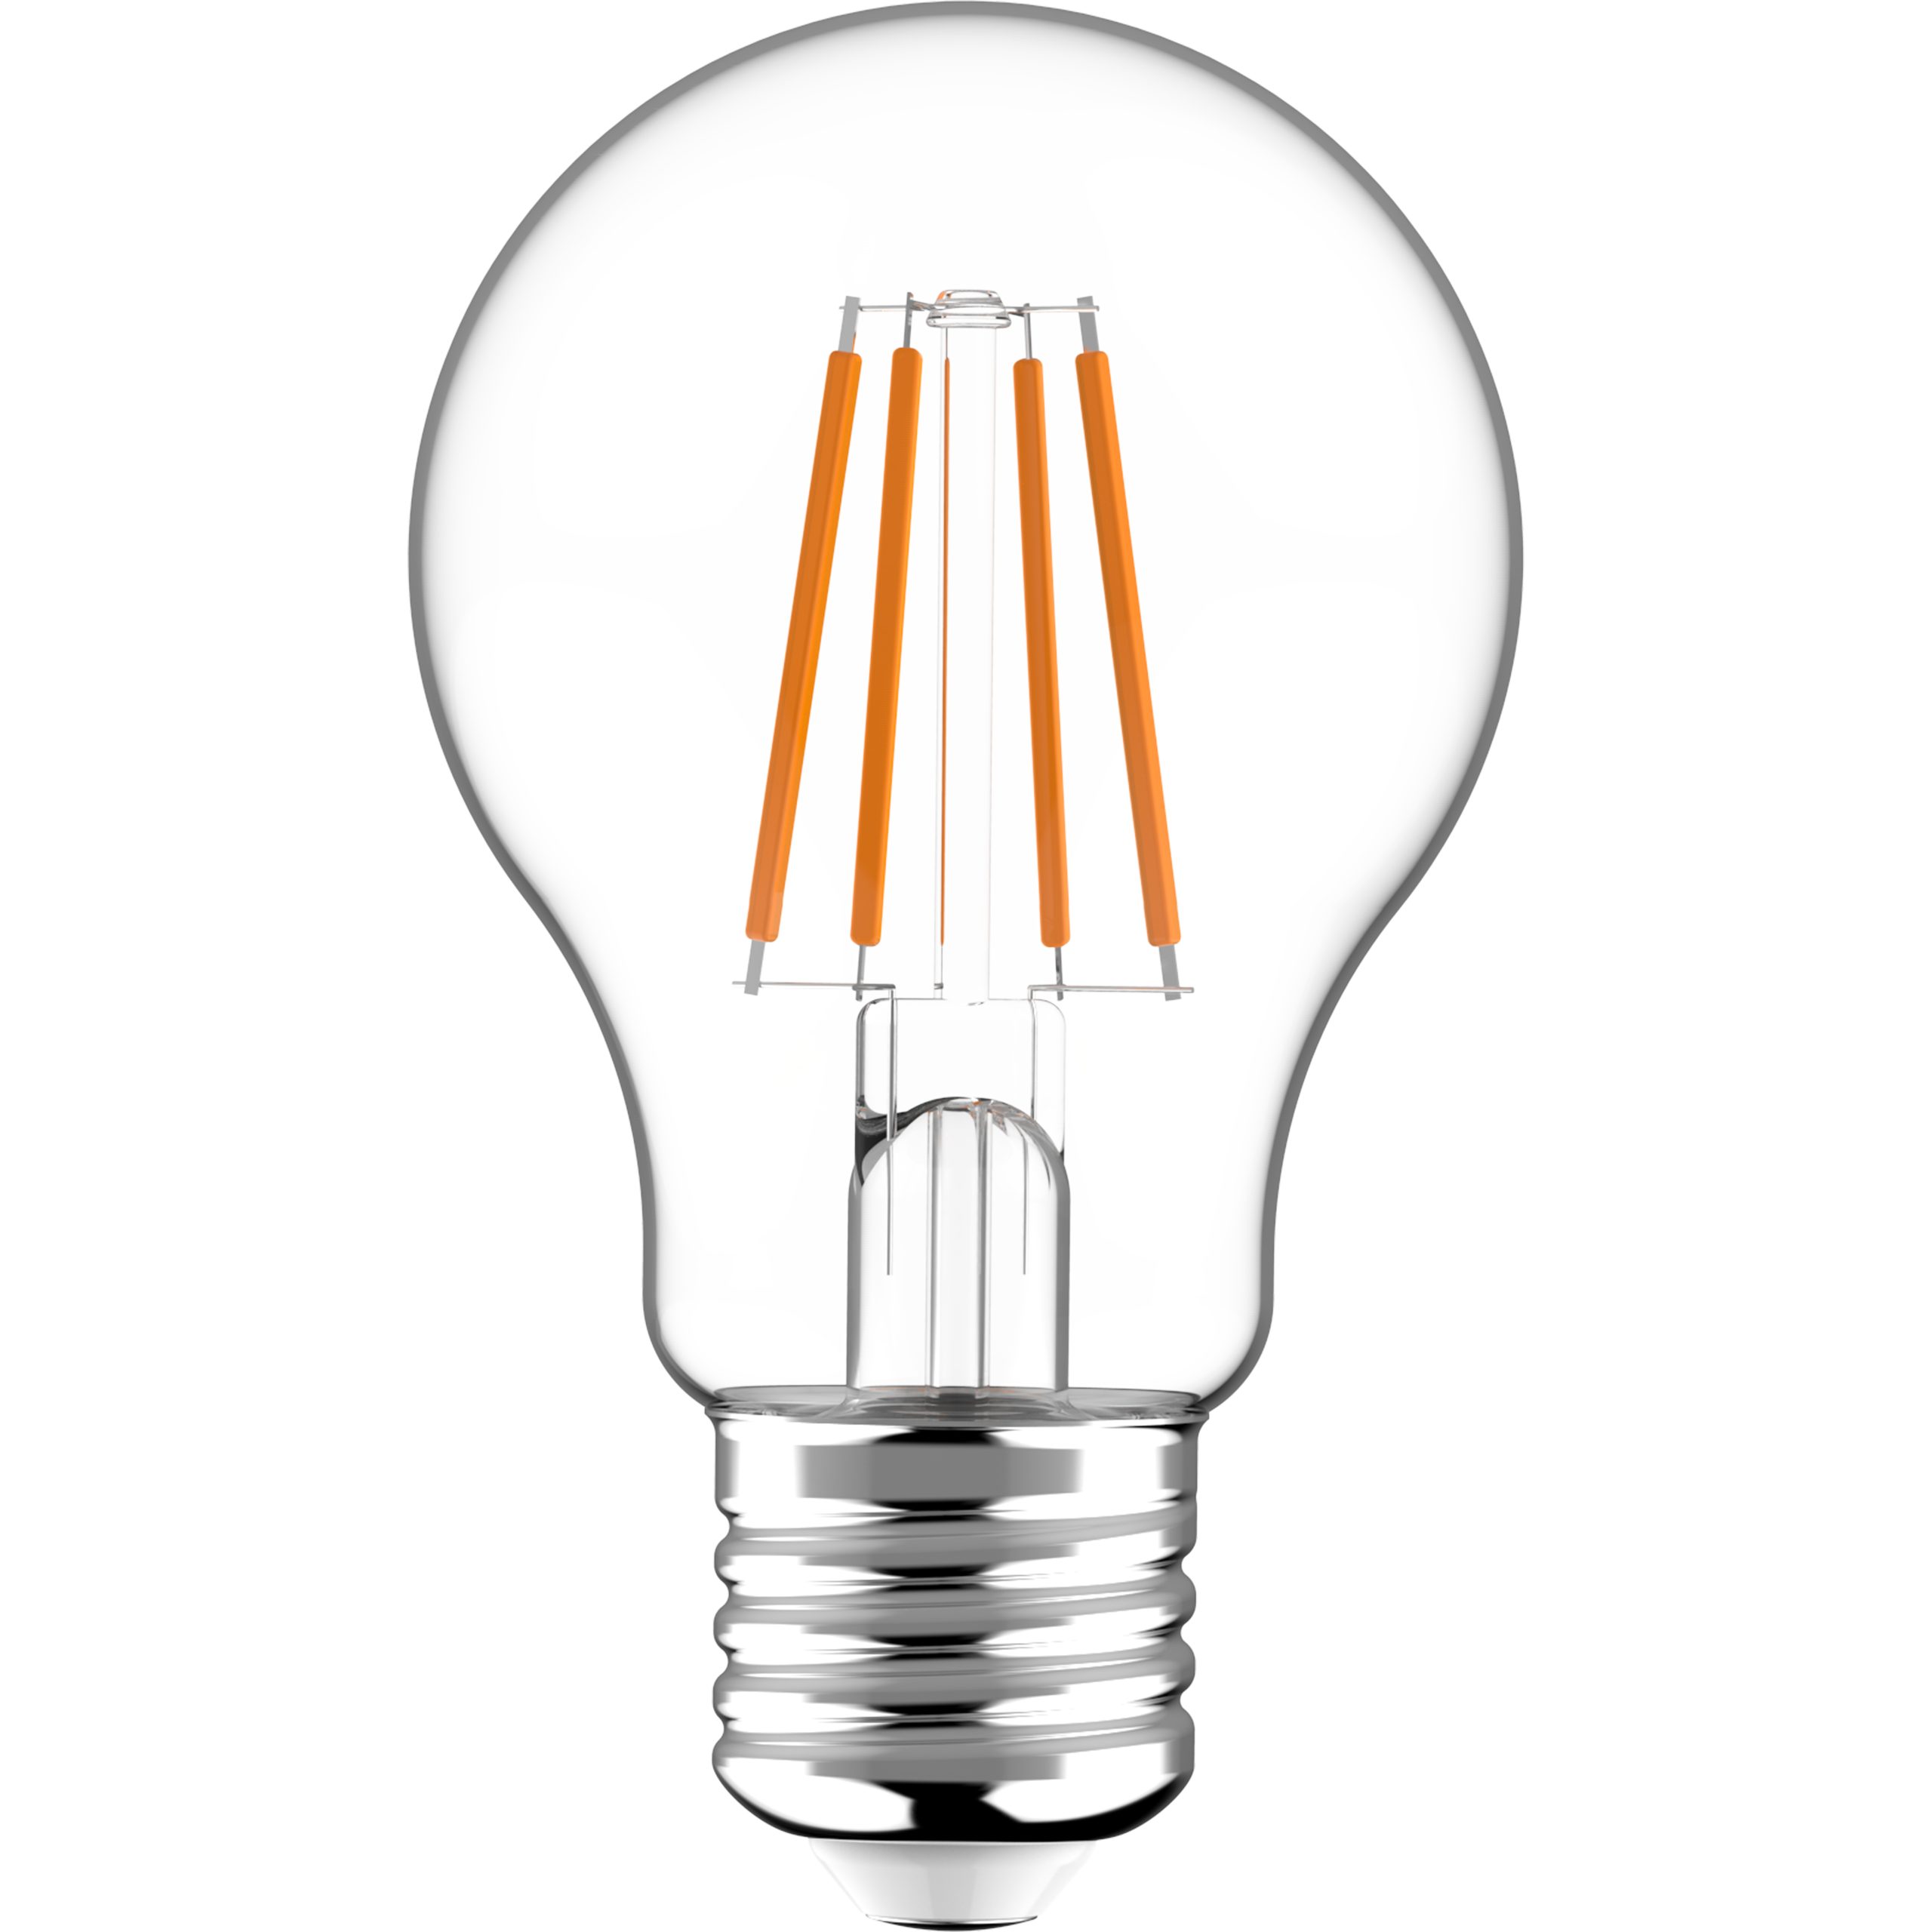 LED's light LED-Leuchtmittel 0620140 LED Glühbirne, E27, E27 4.5W warmweiß Klar A60